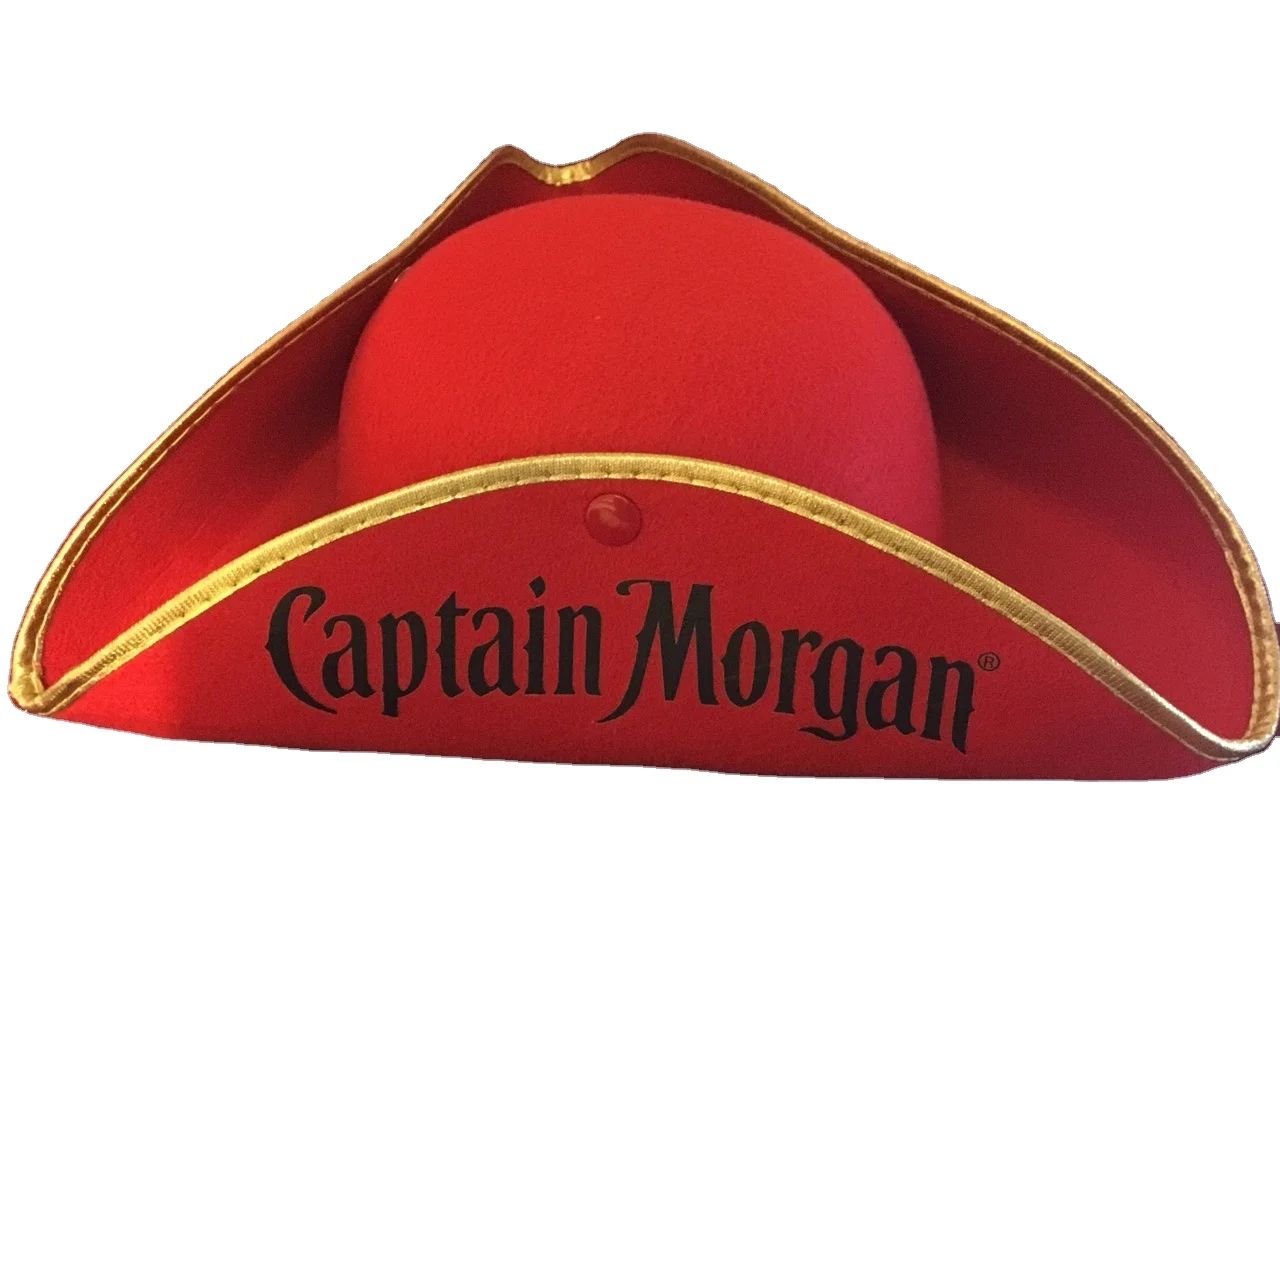 Шляпа Капитан Морган. Шляпа капитана крюка. Tricorn.